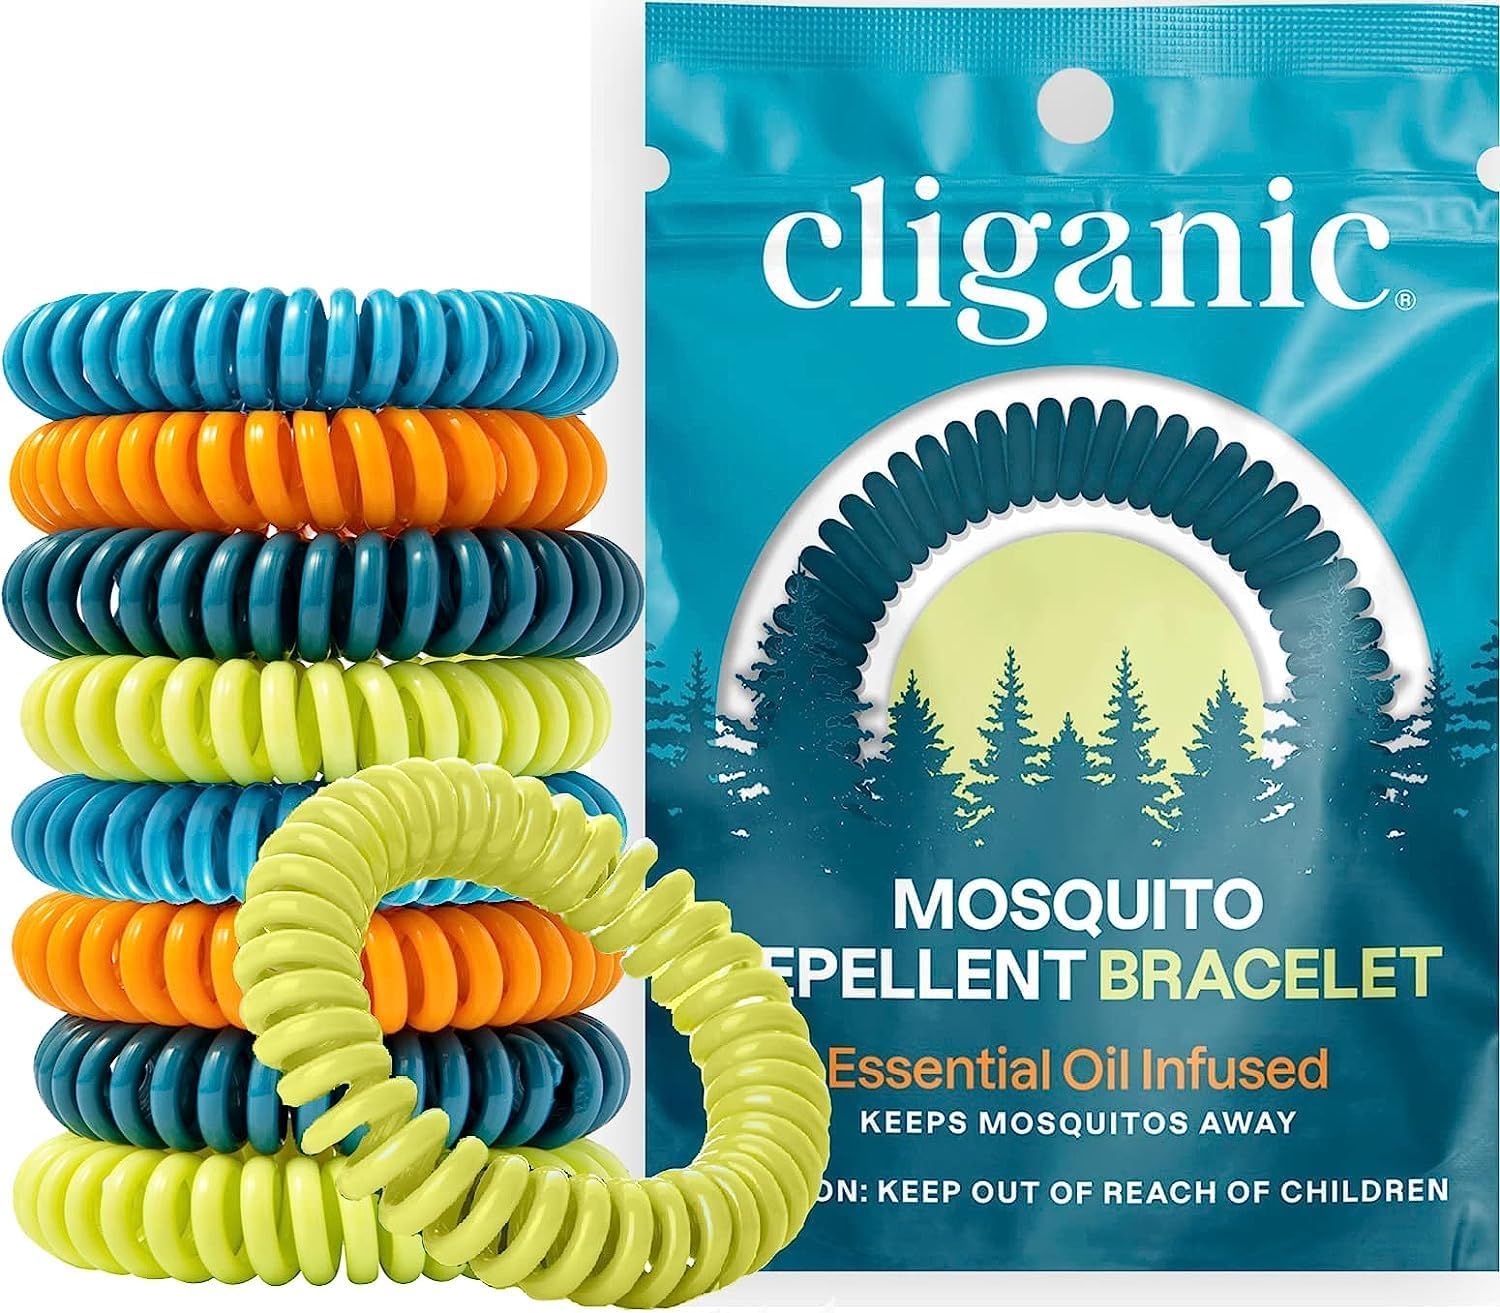 Mosquito repellent bracelets